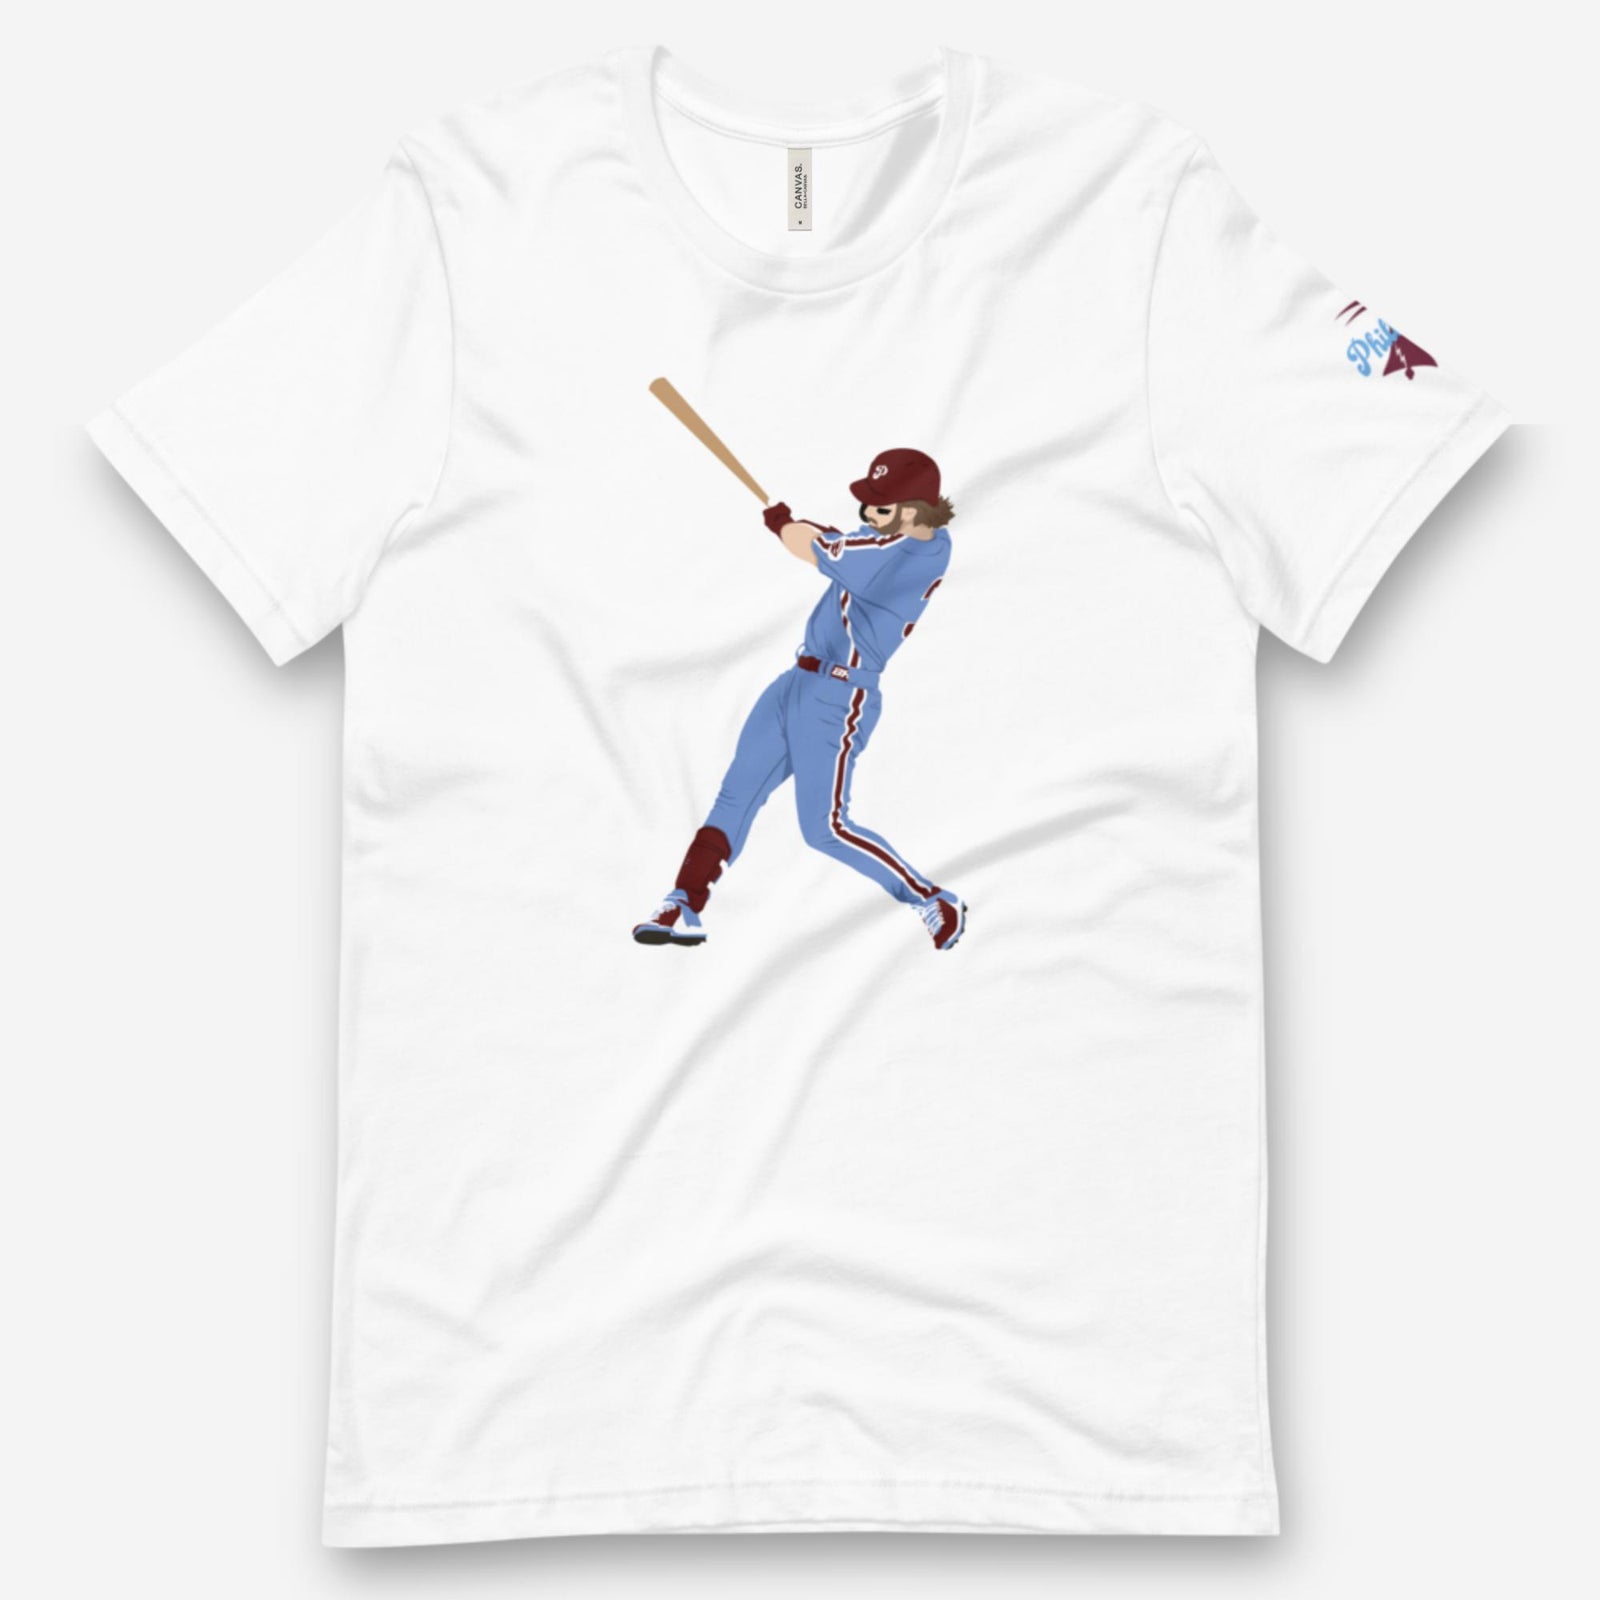 Atta Boy Harper Phillies Shirt - Teeducks